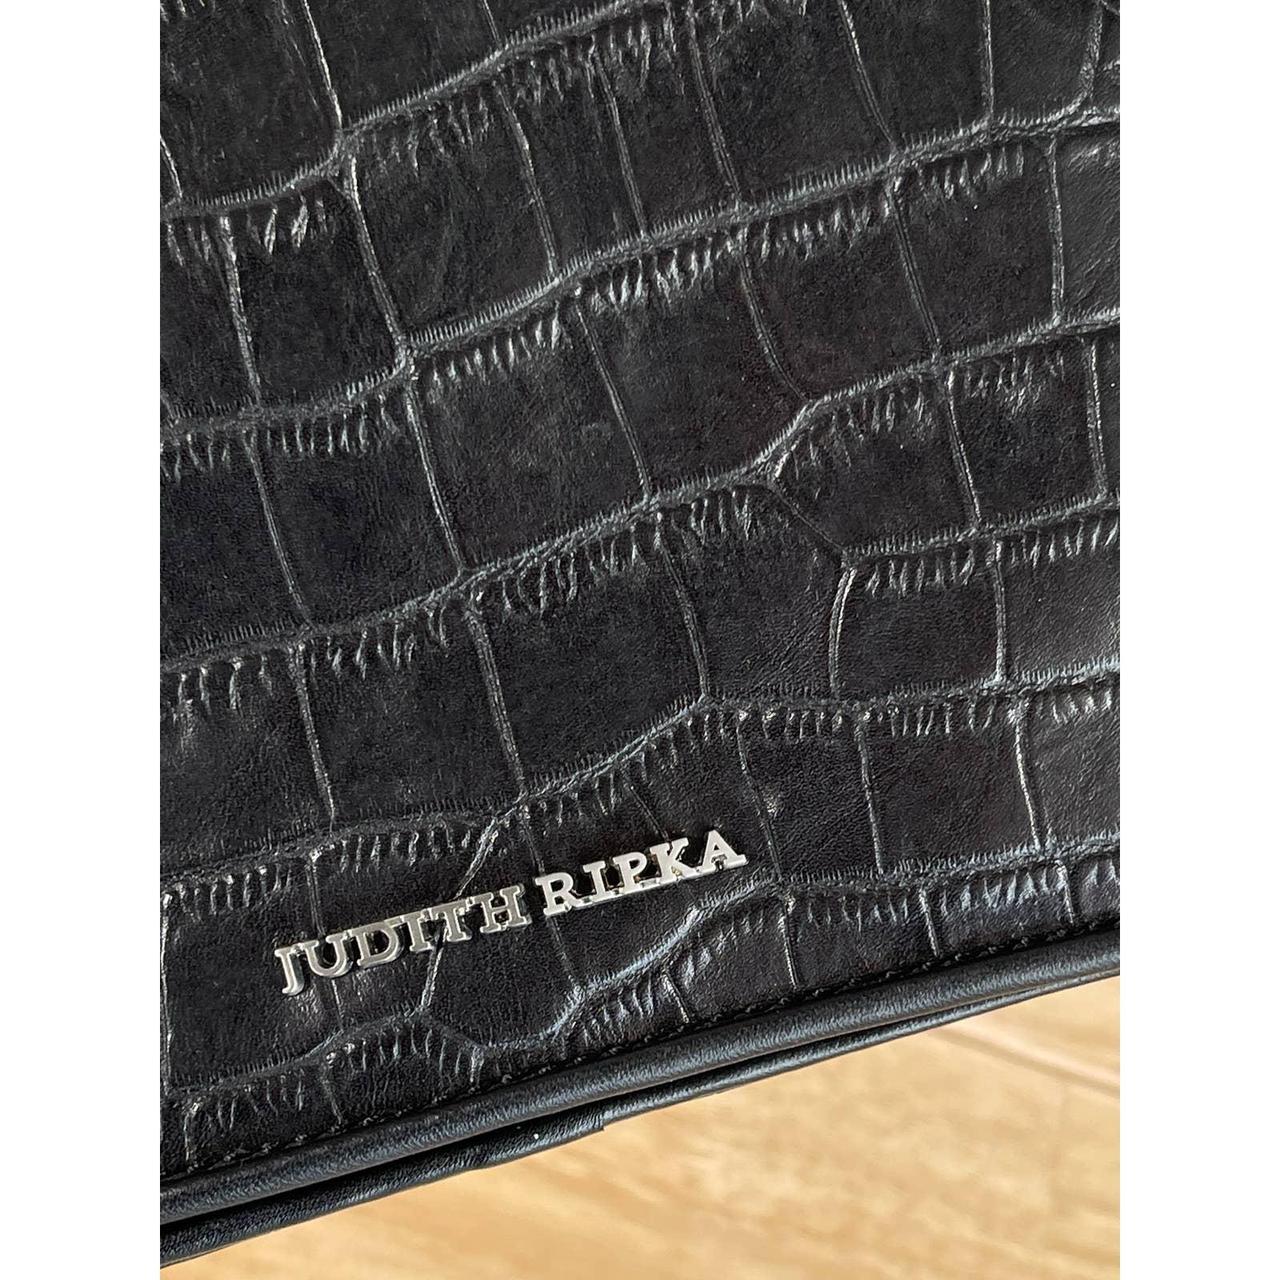 BNWT☆CERRUTI 1881 ~ 100% Calf Leather Borsa 'Judith' Snakeskin Print Handbag☆  £49.99 - PicClick UK